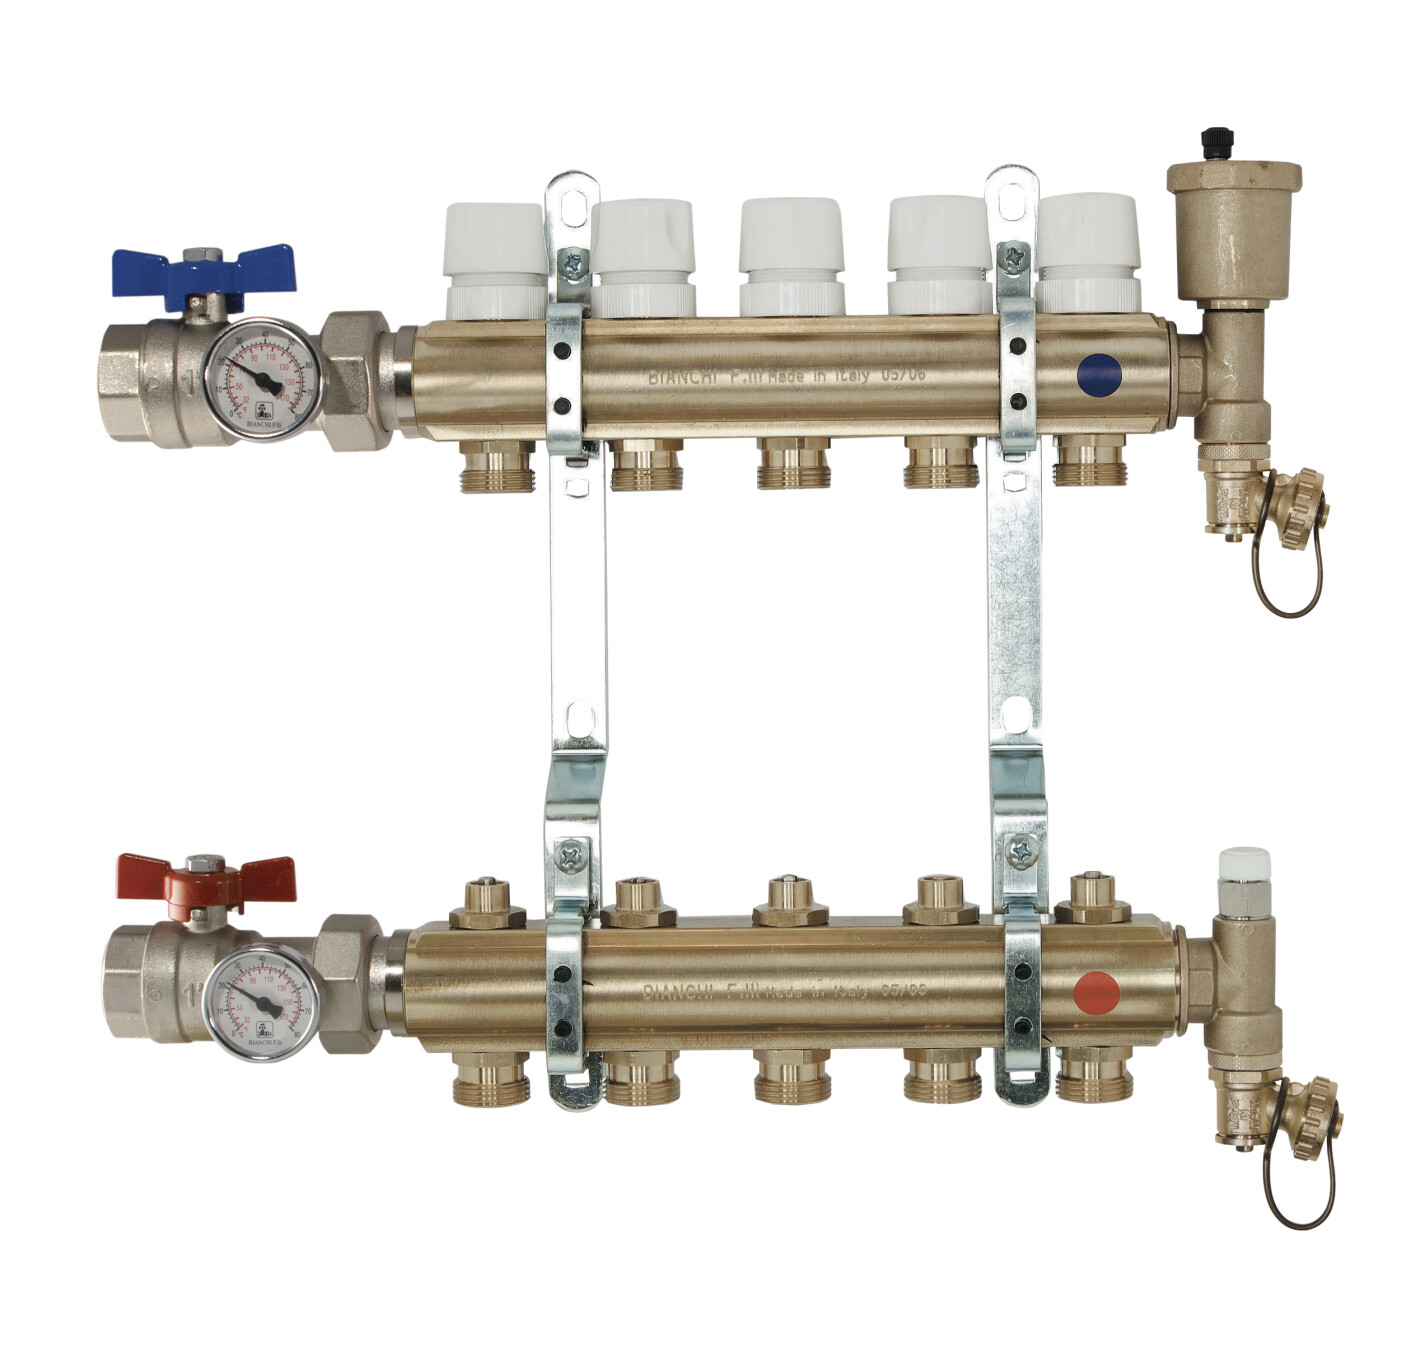 Brass manifolds therm. valves and lockshield, valves, disch.